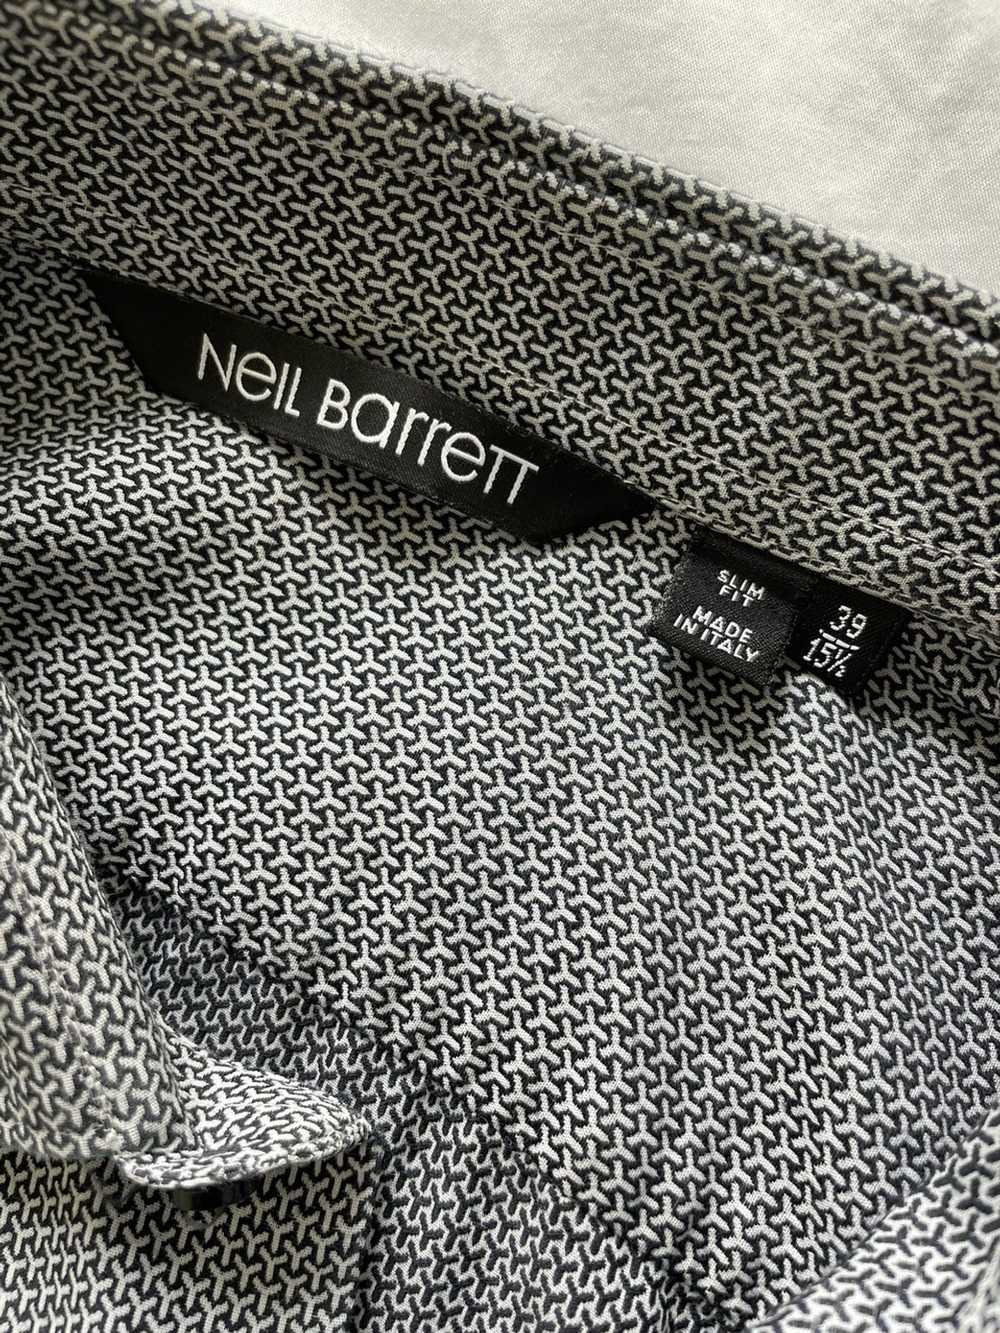 Neil Barrett 2 tone dress shirt - image 6